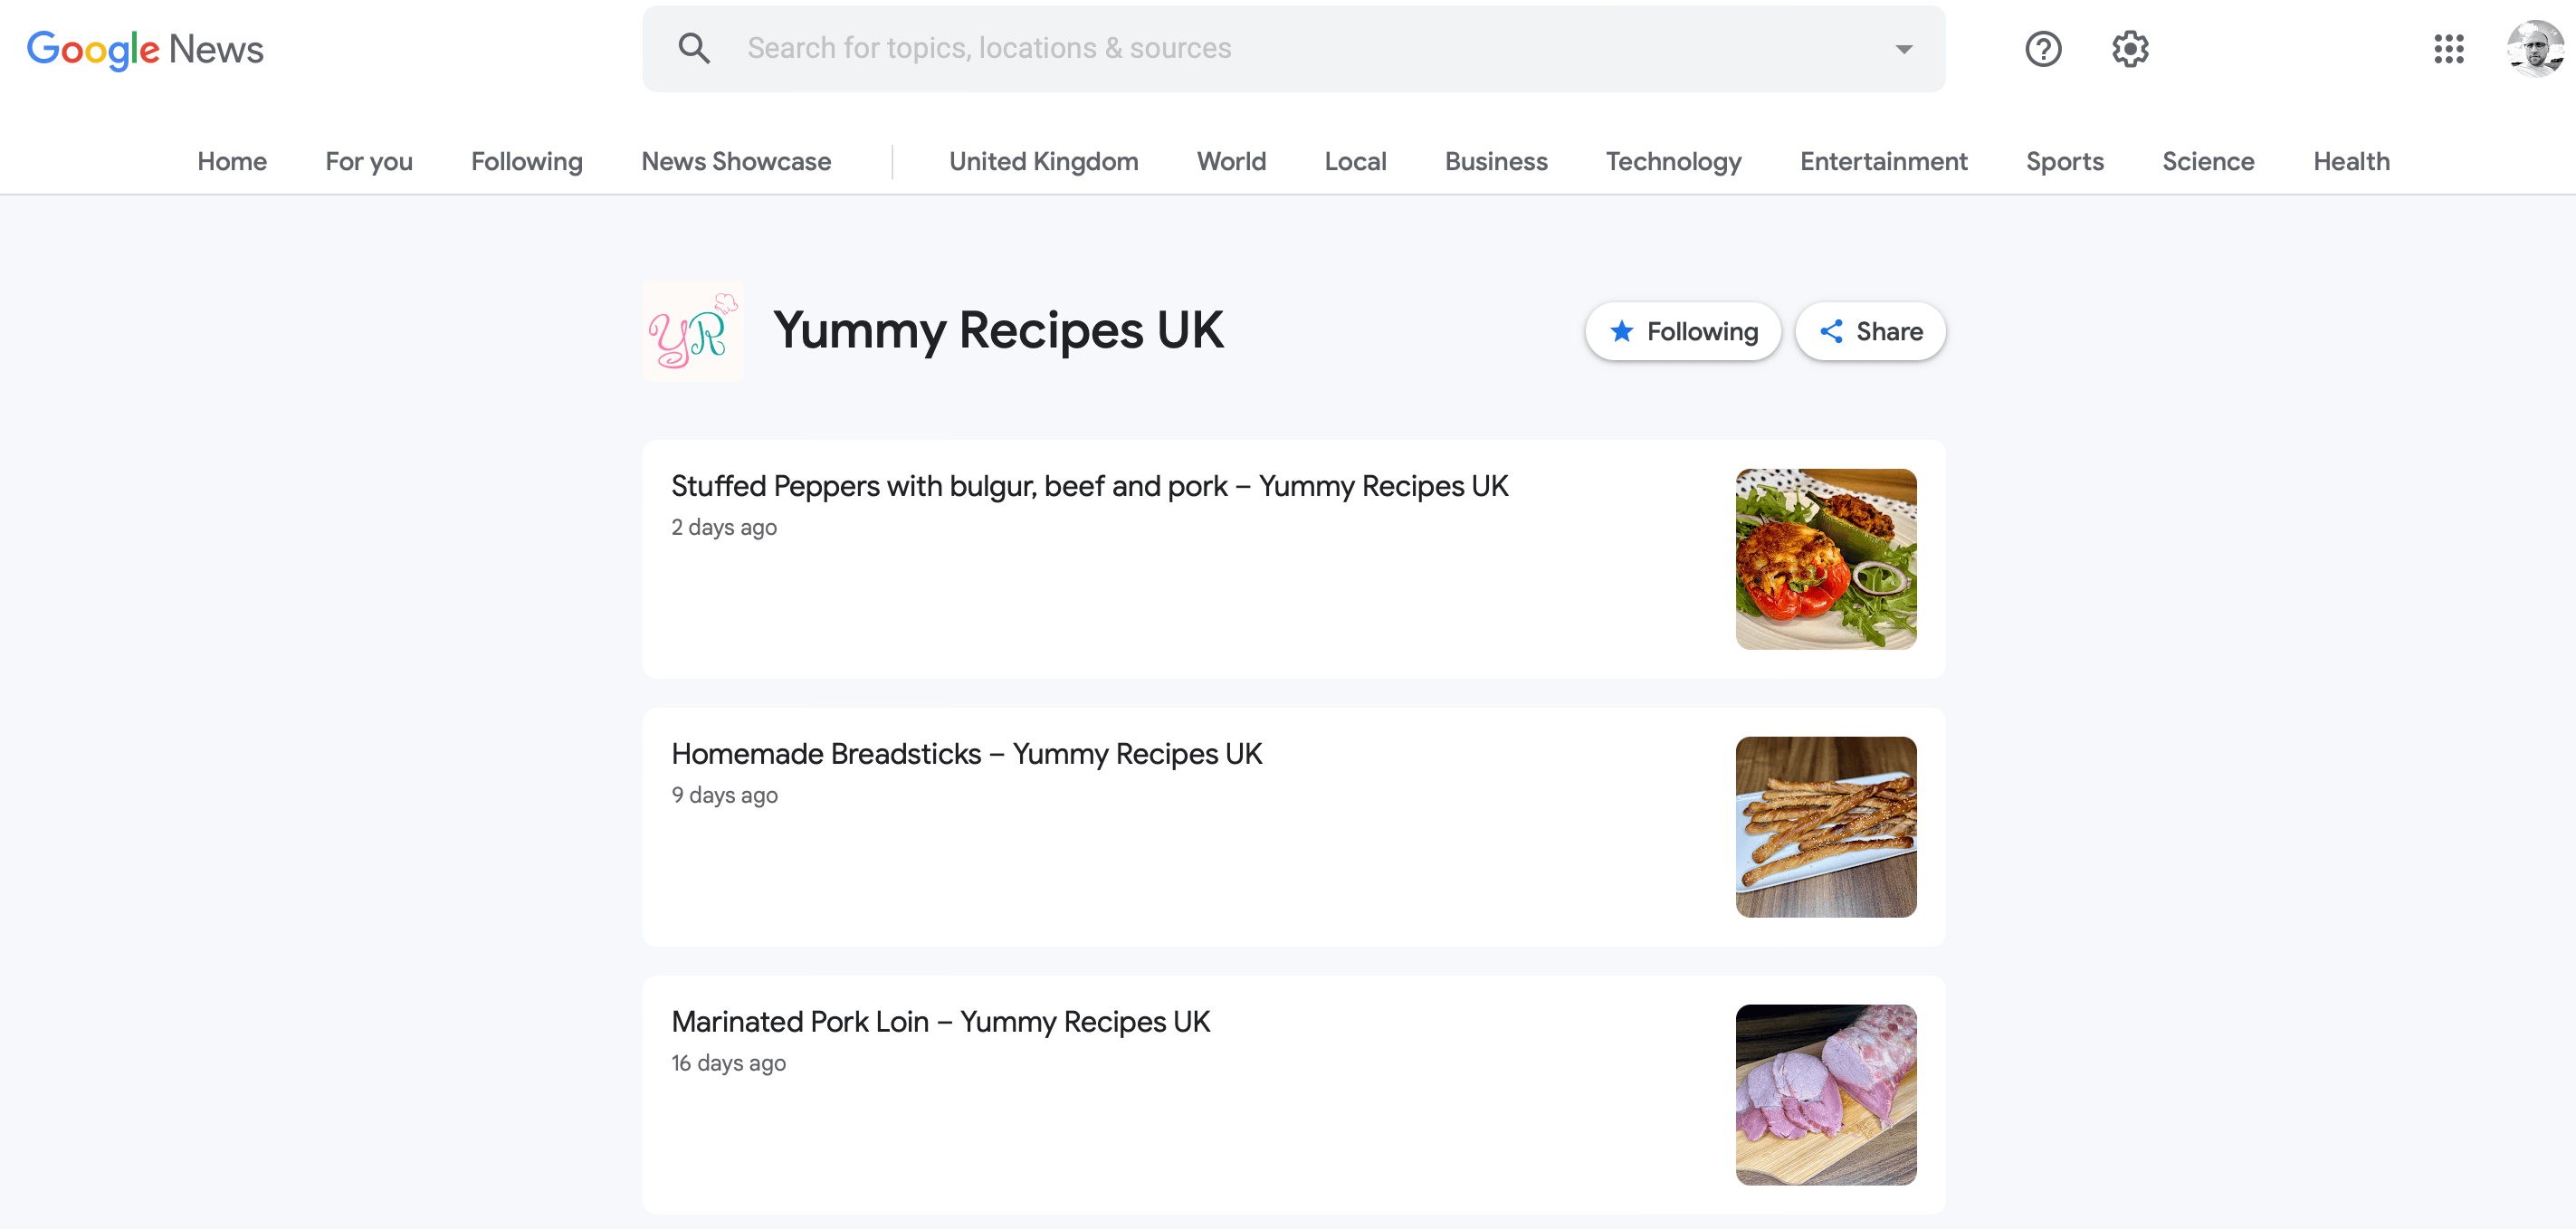 Google News - Source - Yummy Recipes UK